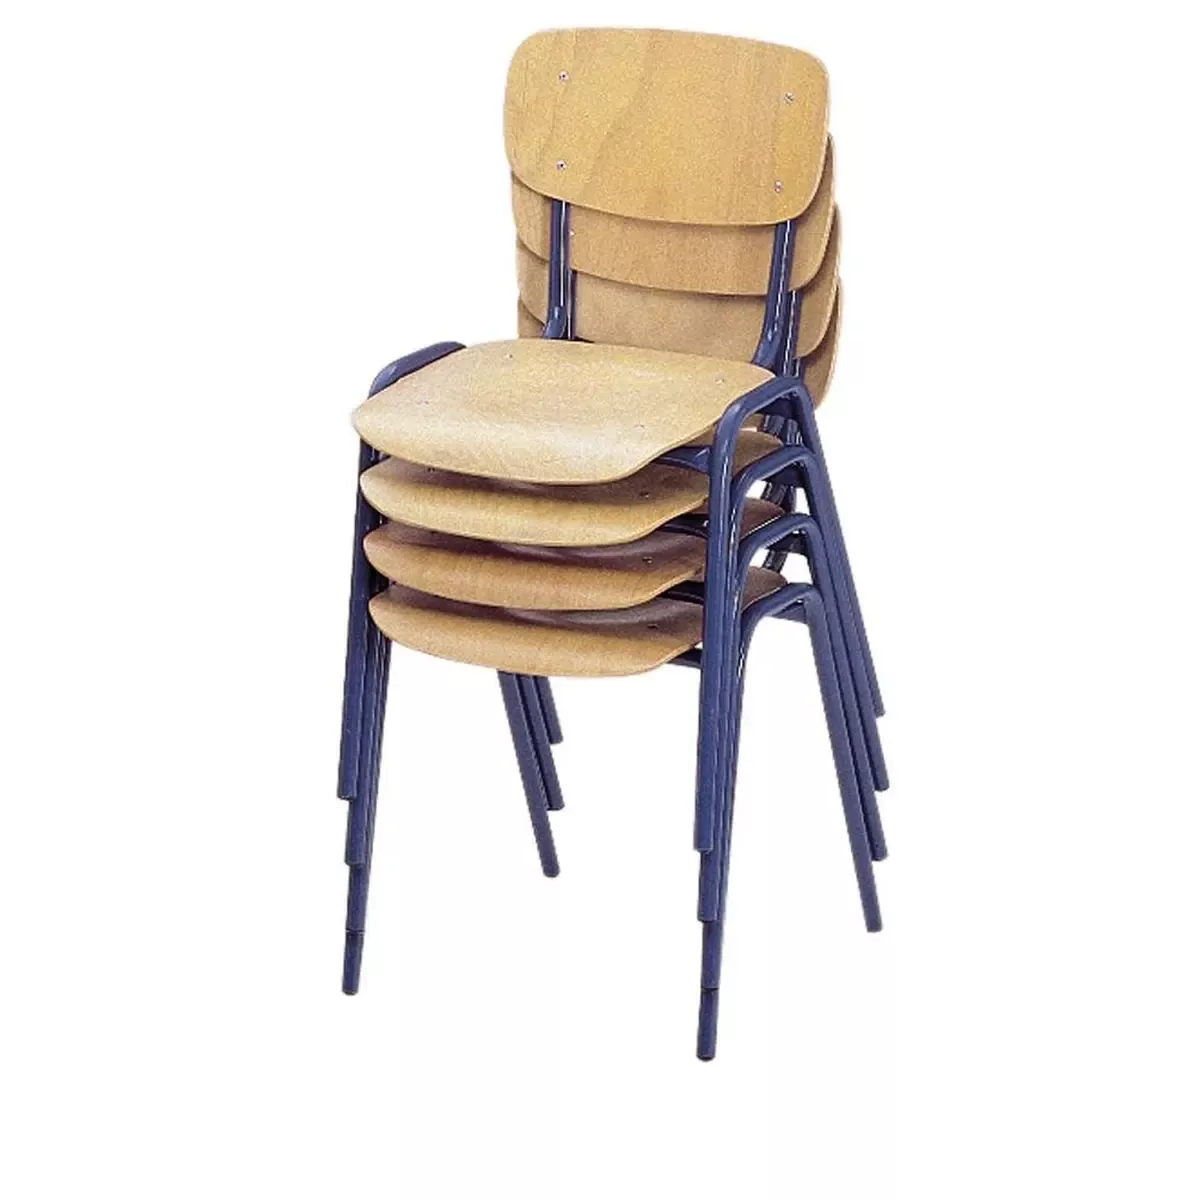 Stapelstuhl, Sitz und Rücken Buchensperrholz, naturlackiert,Gestell-Durchm. 20 mm, RAL 5000 violettblau, VE 2 Stück